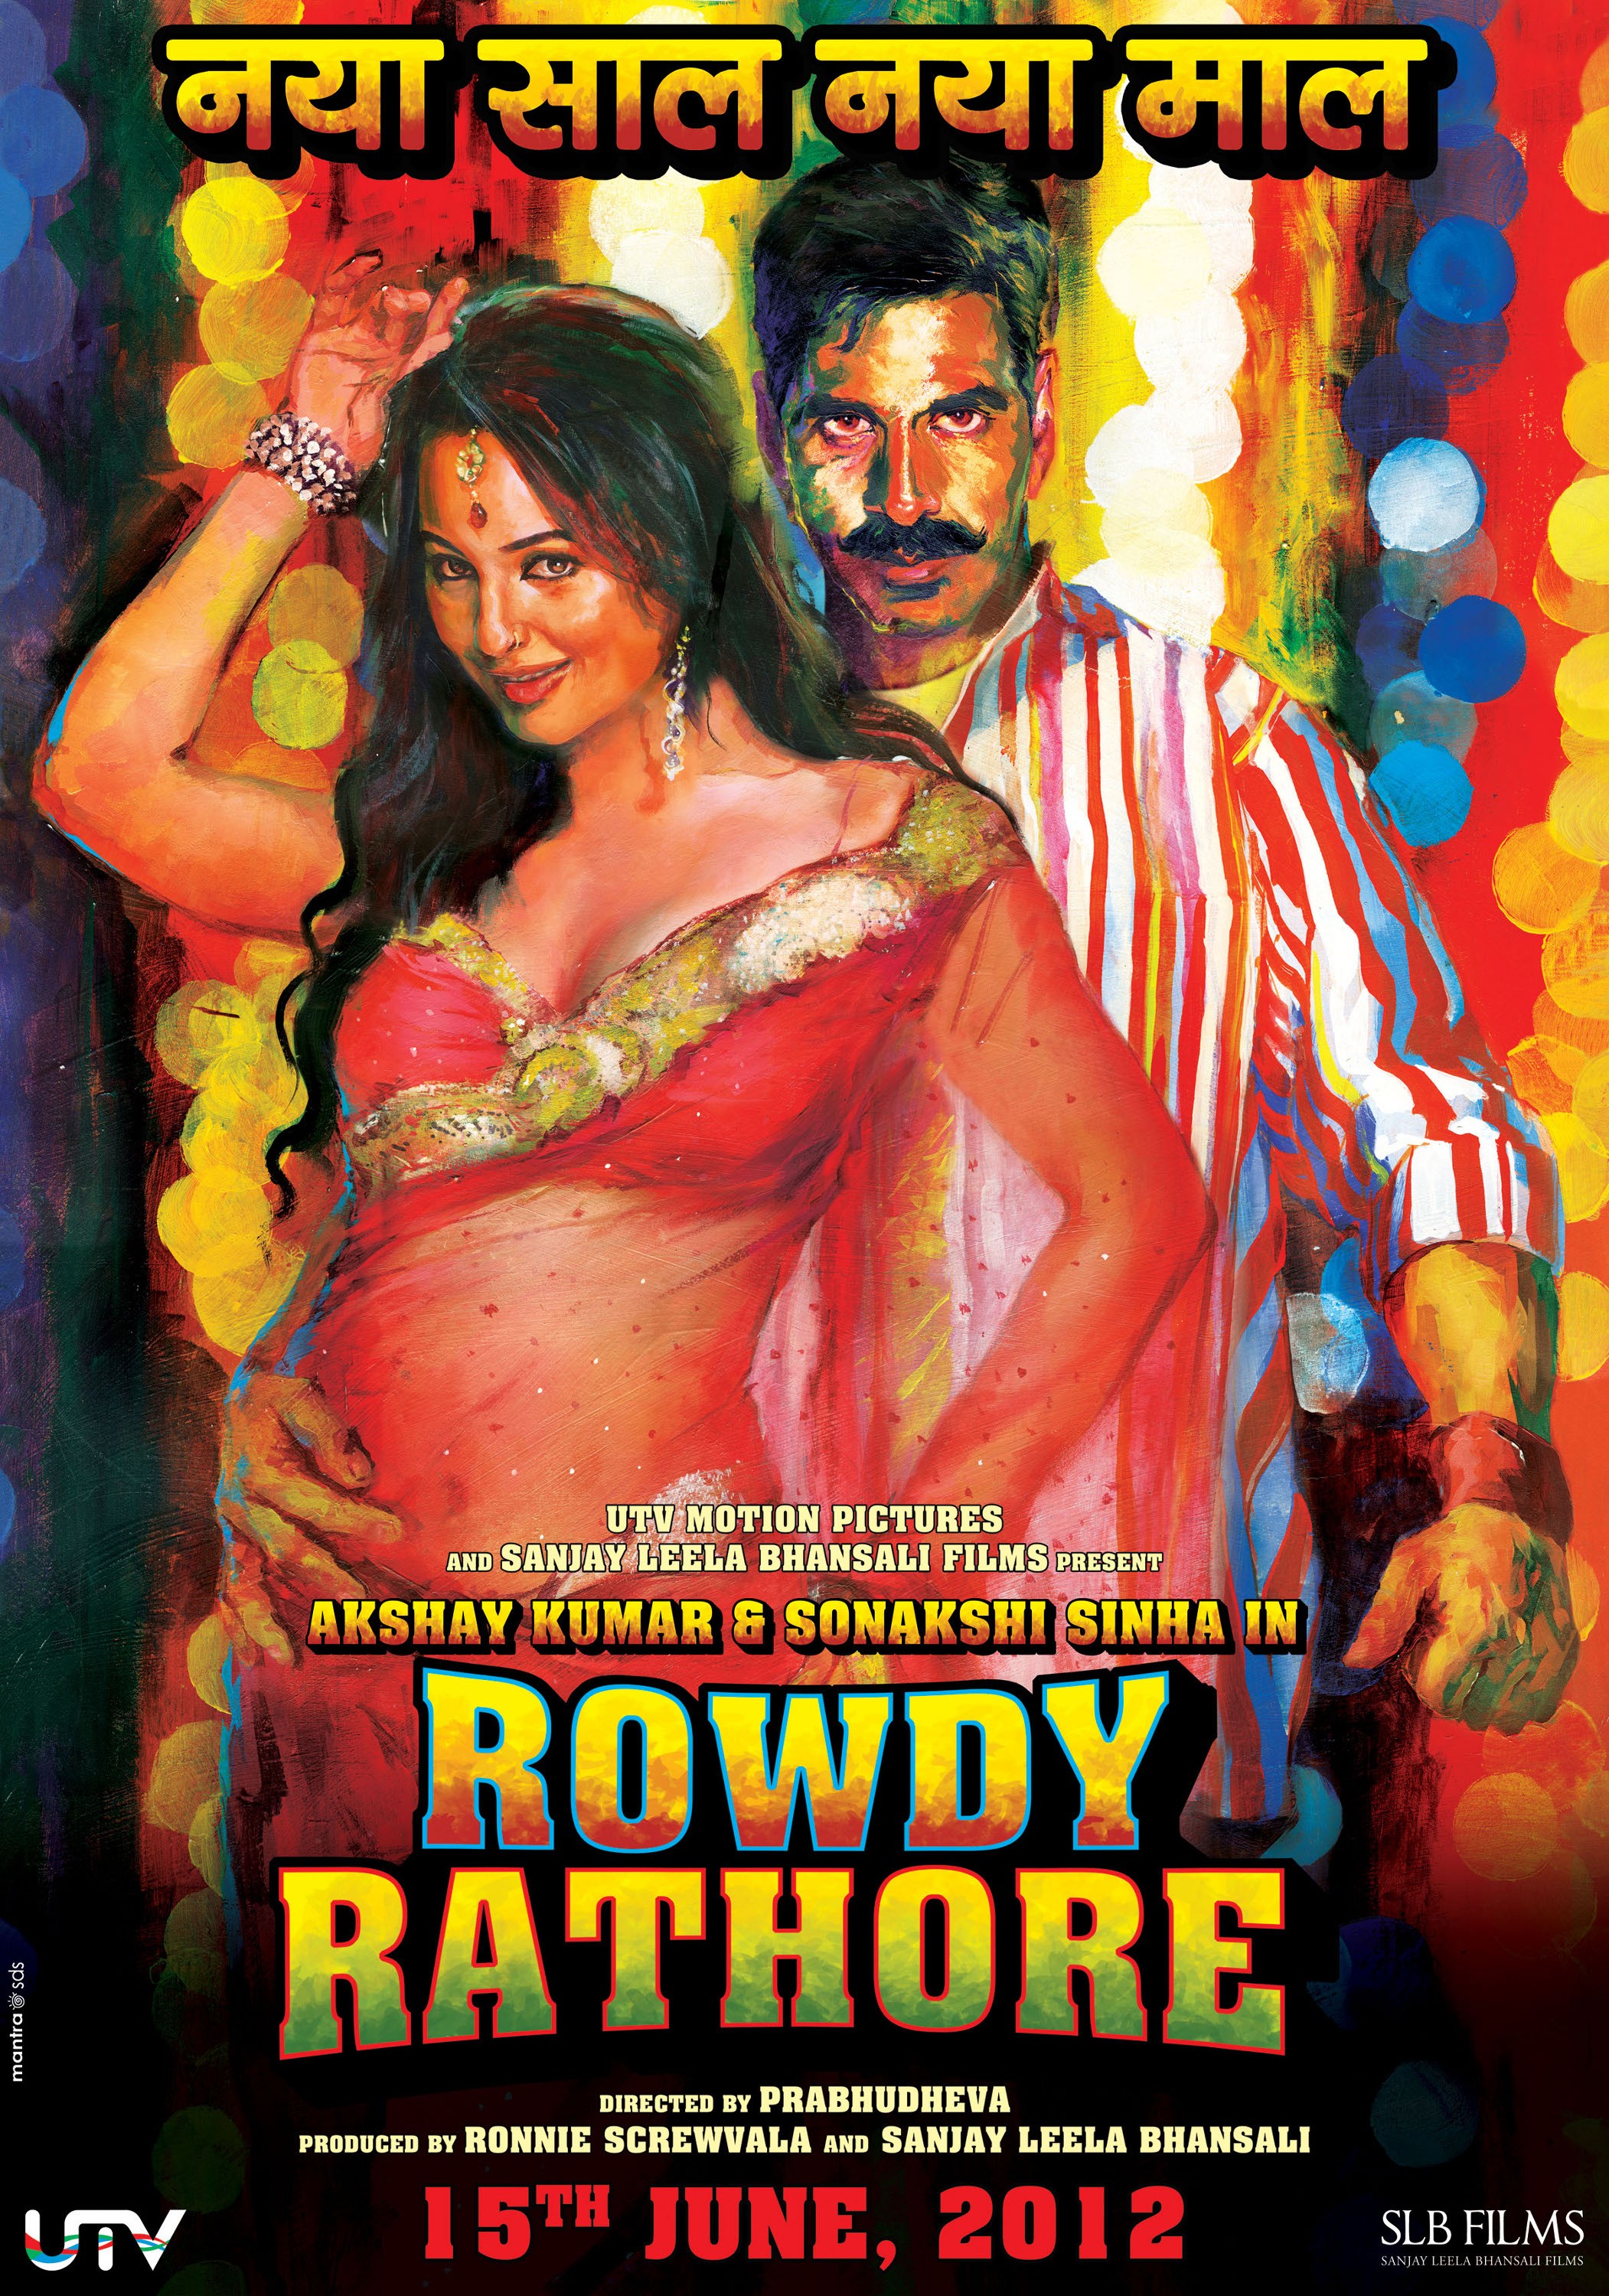 Mega Sized Movie Poster Image for Rowdy Rathore (#3 of 7)